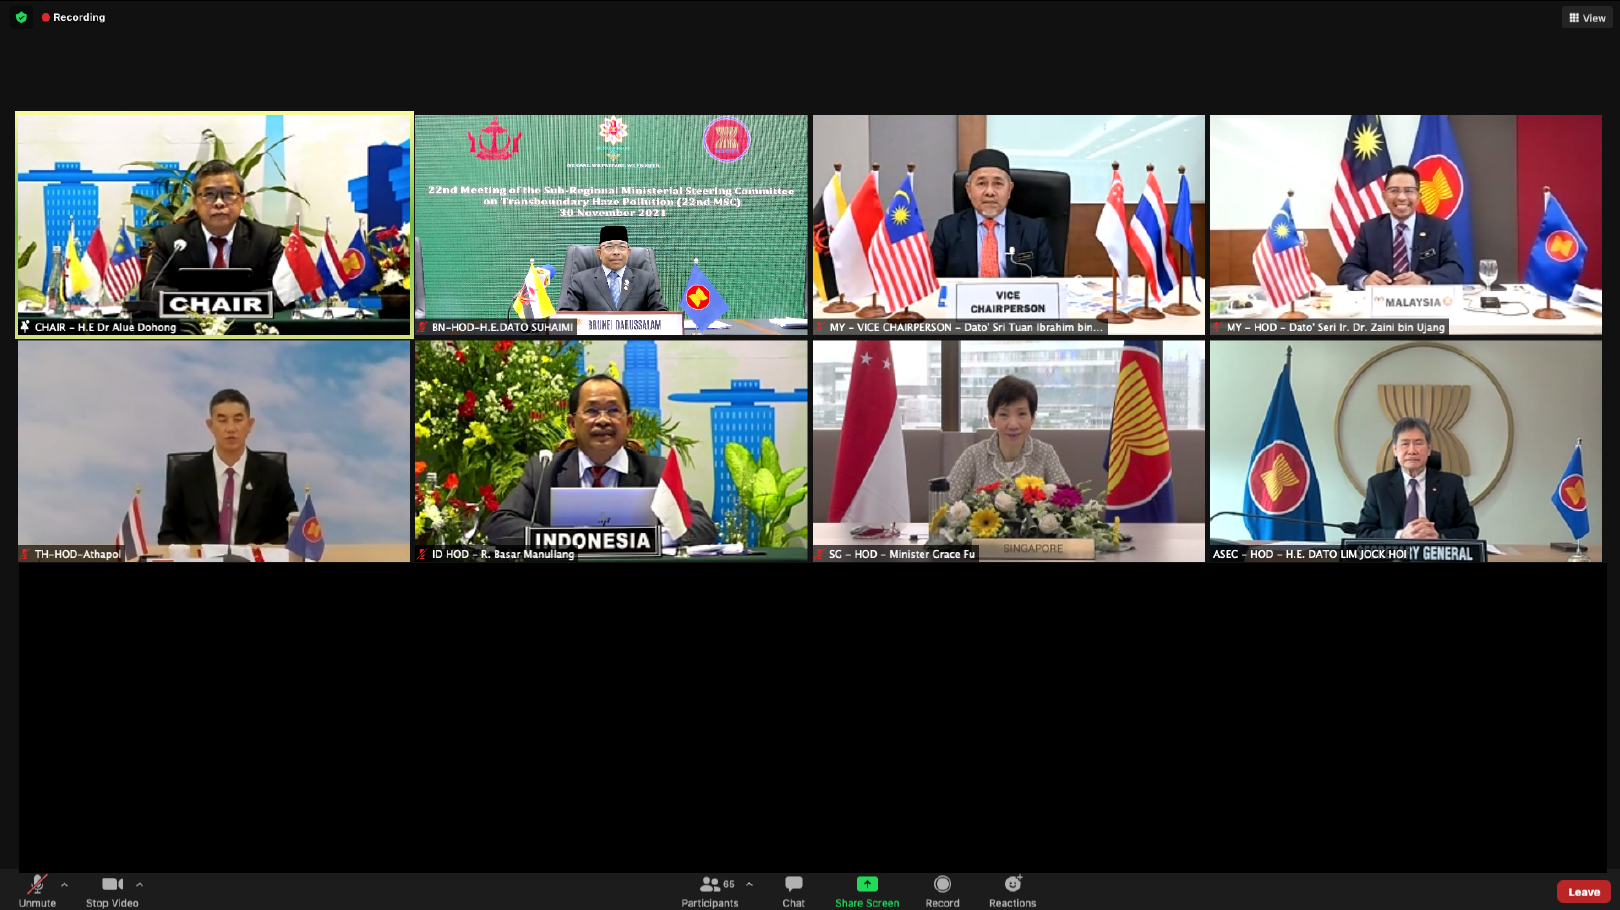 22nd MSC meeting Screenshot 2021.png